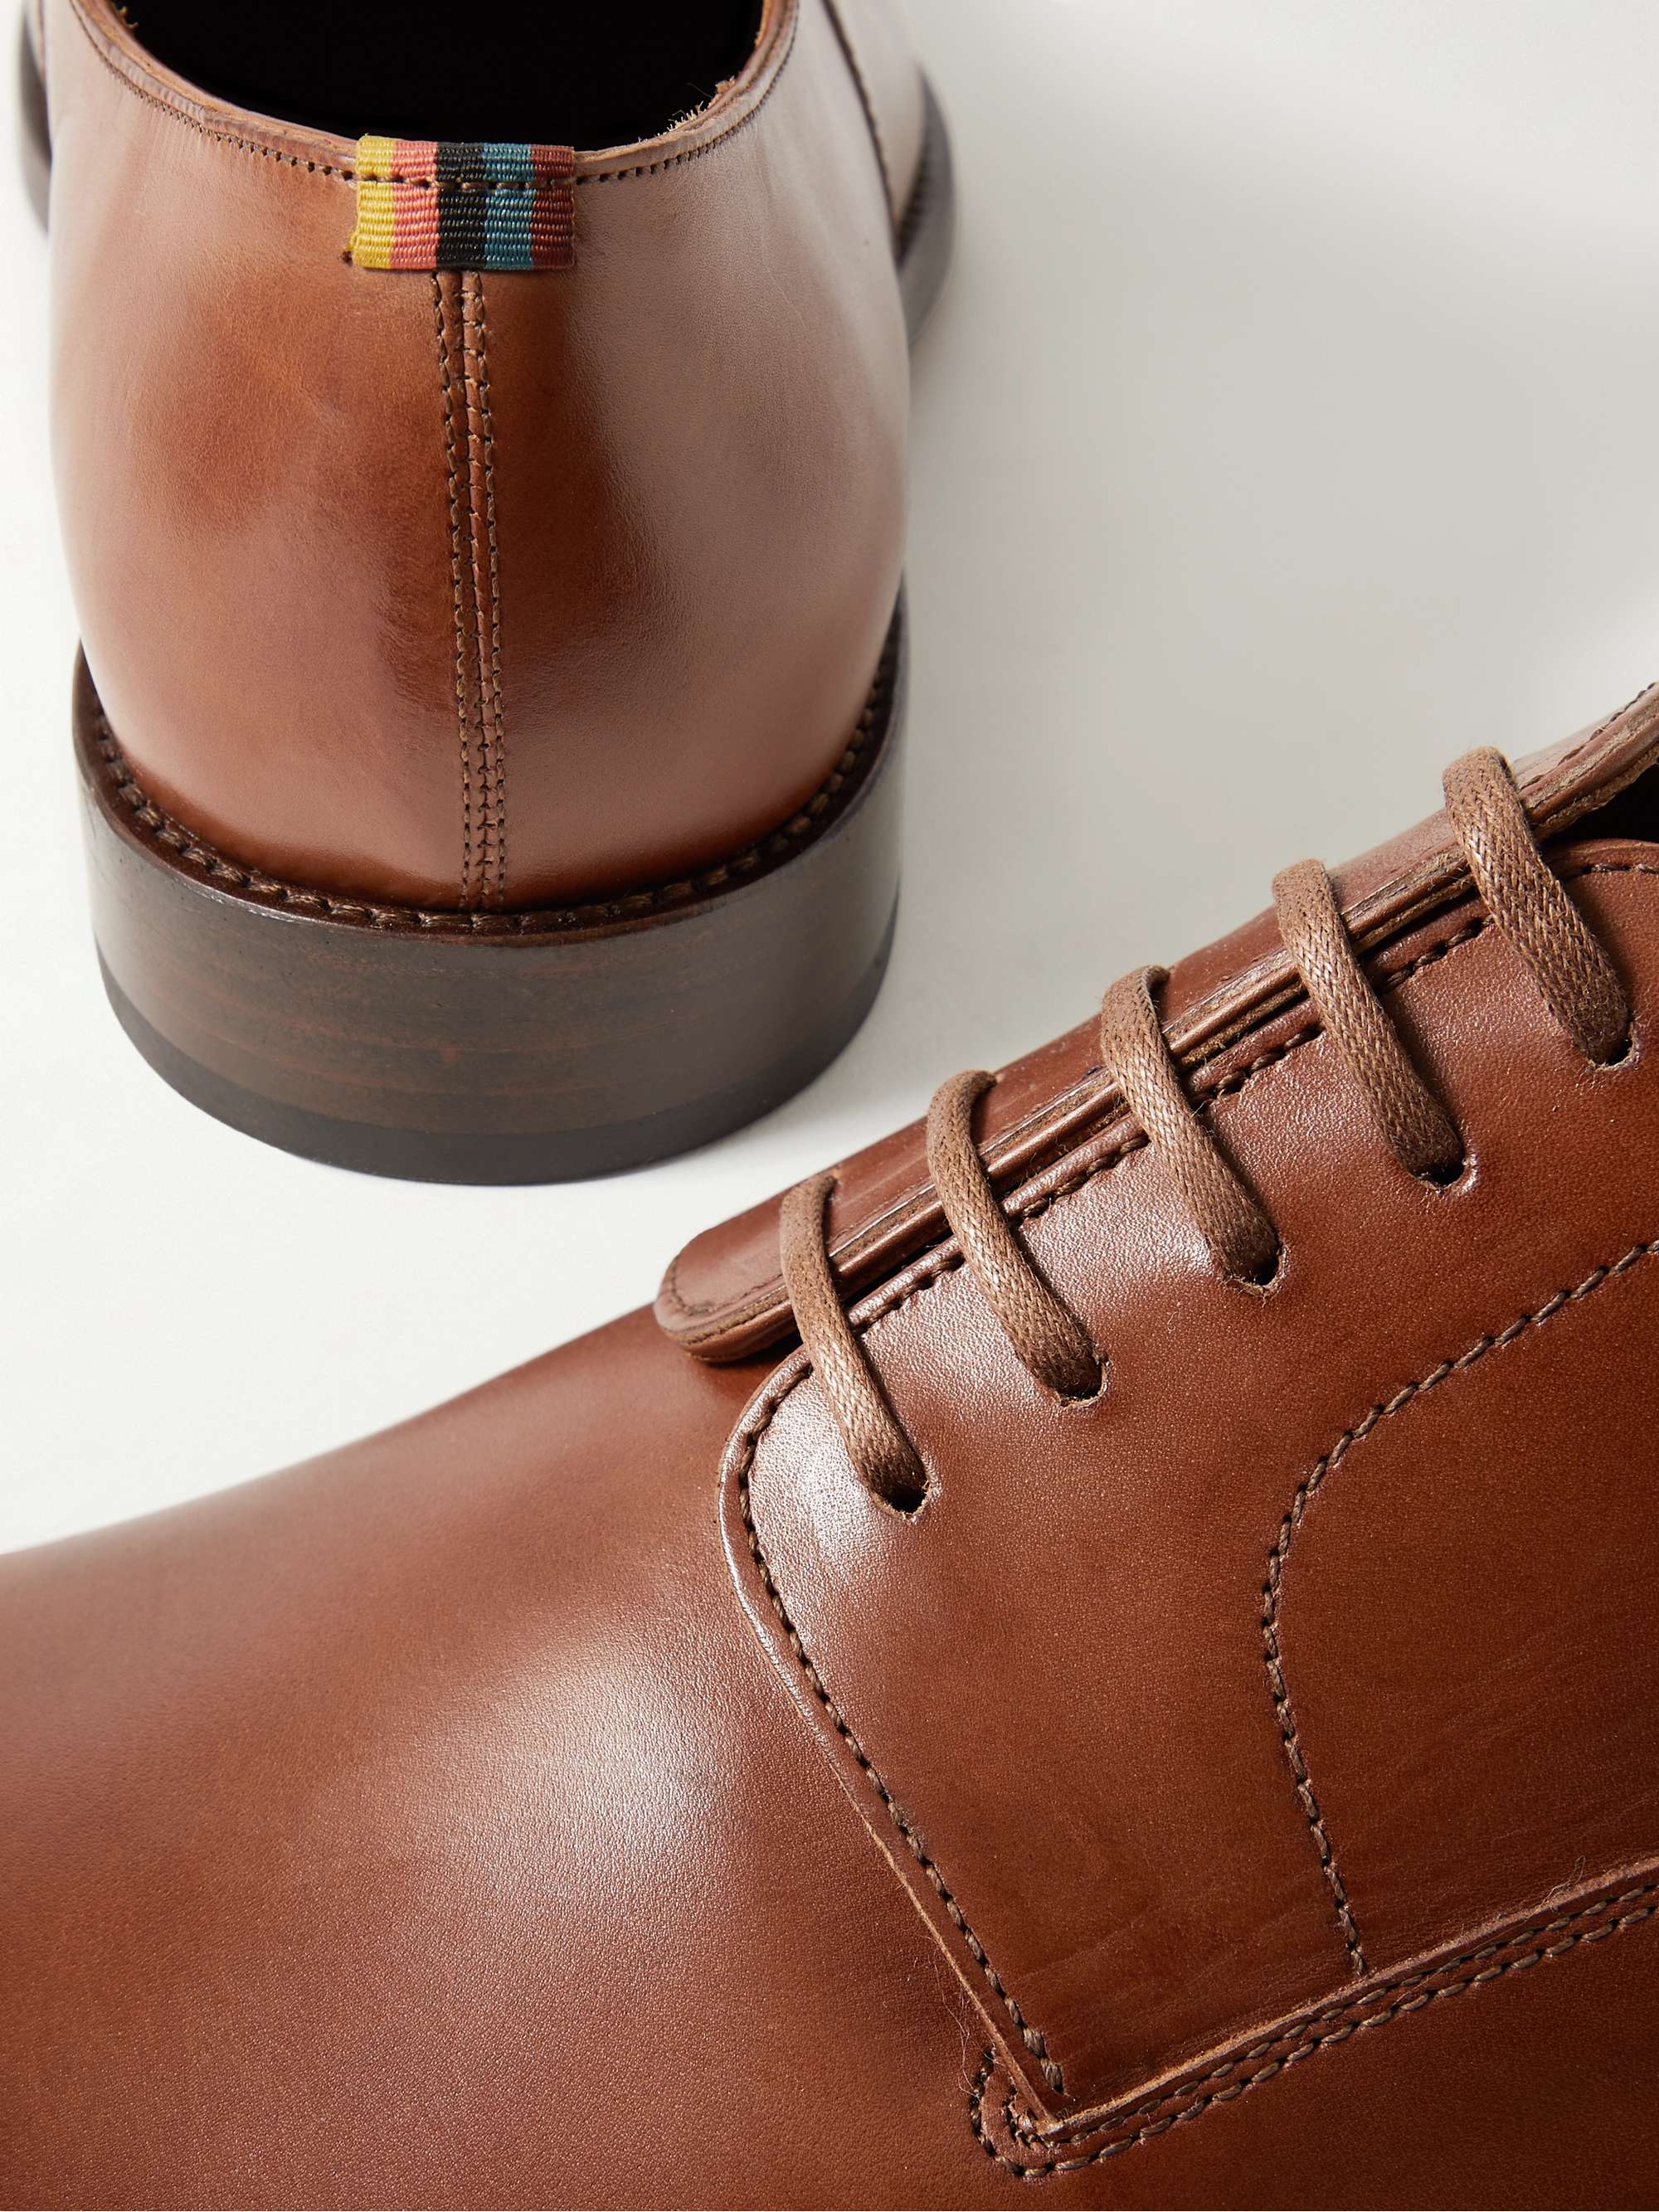 PAUL SMITH Fes Leather Derby Shoes for Men | MR PORTER